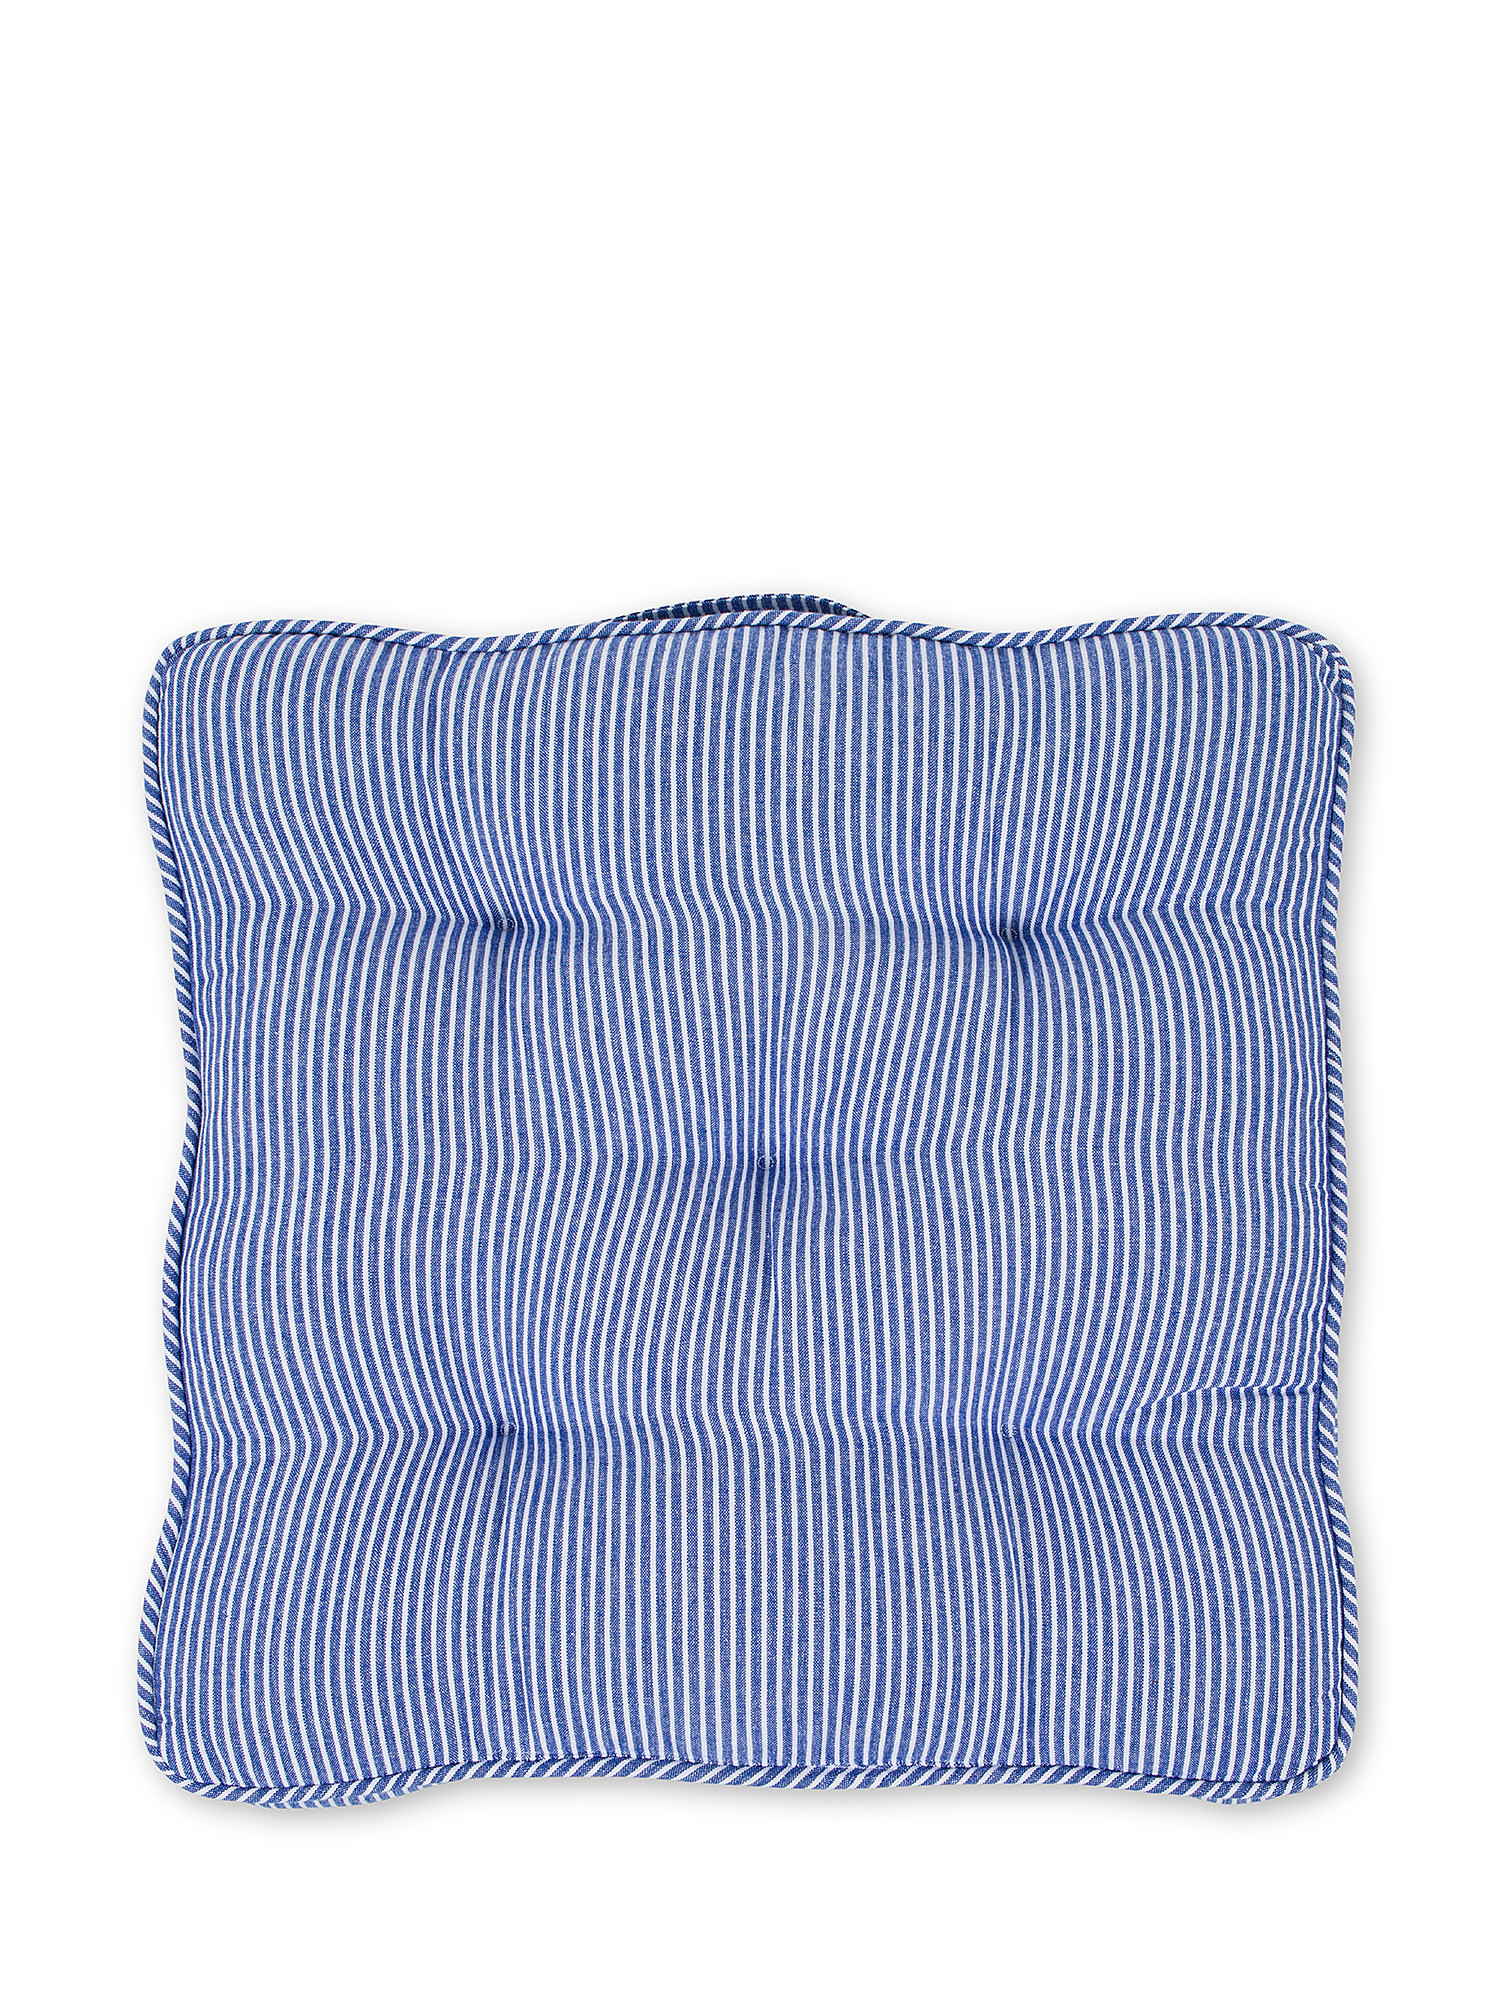 Cuscino 50x 50 cm a materasso, Bianco/Blu, large image number 0